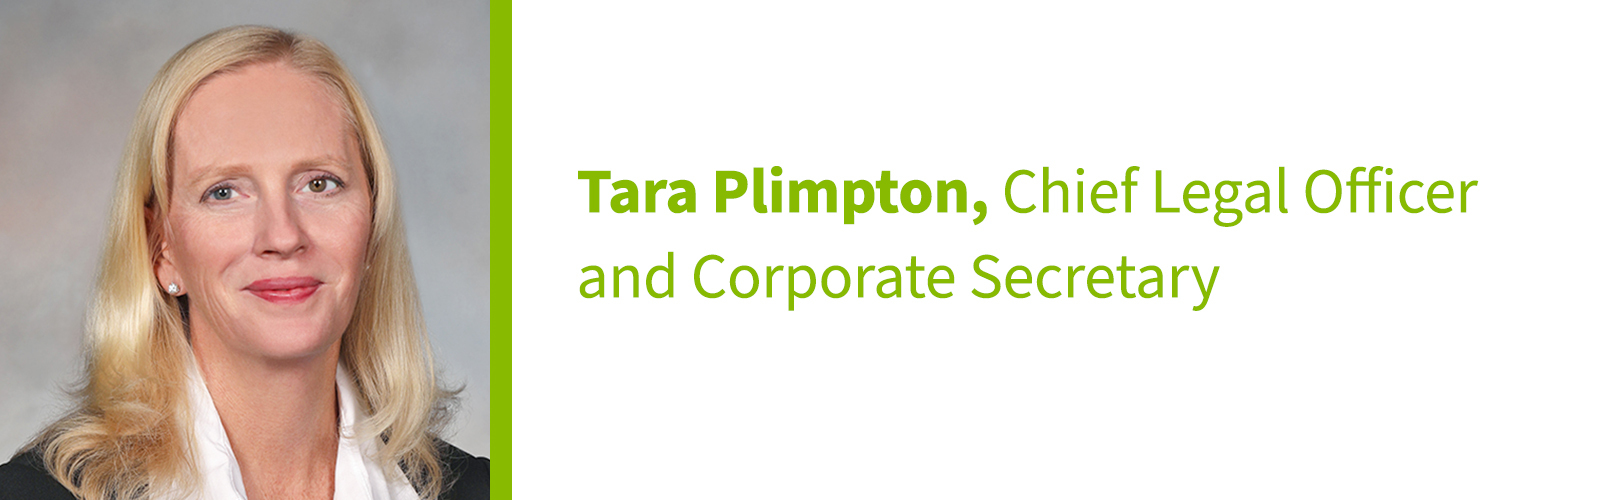 Tara Plimpton headshot and title